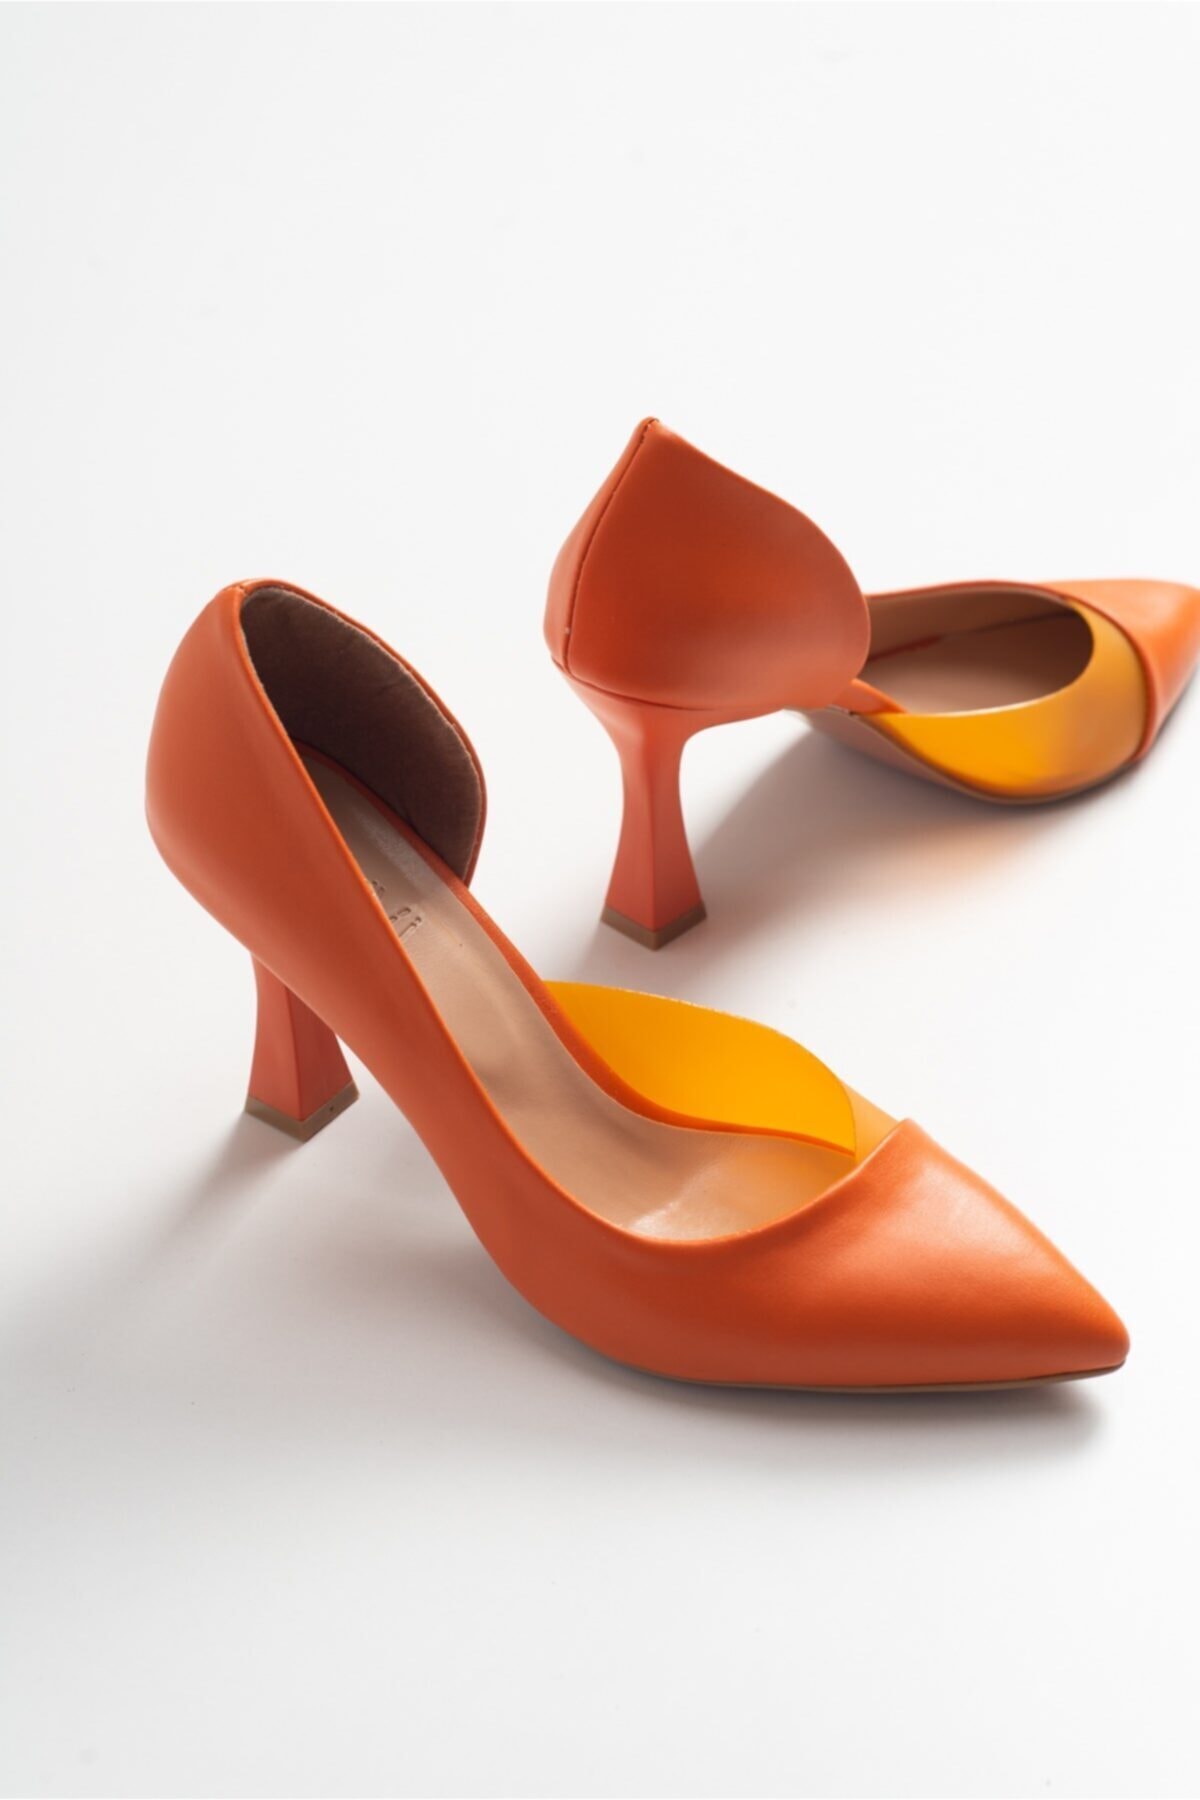 LuviShoes 653 Orange Skin Heels Women's Shoes